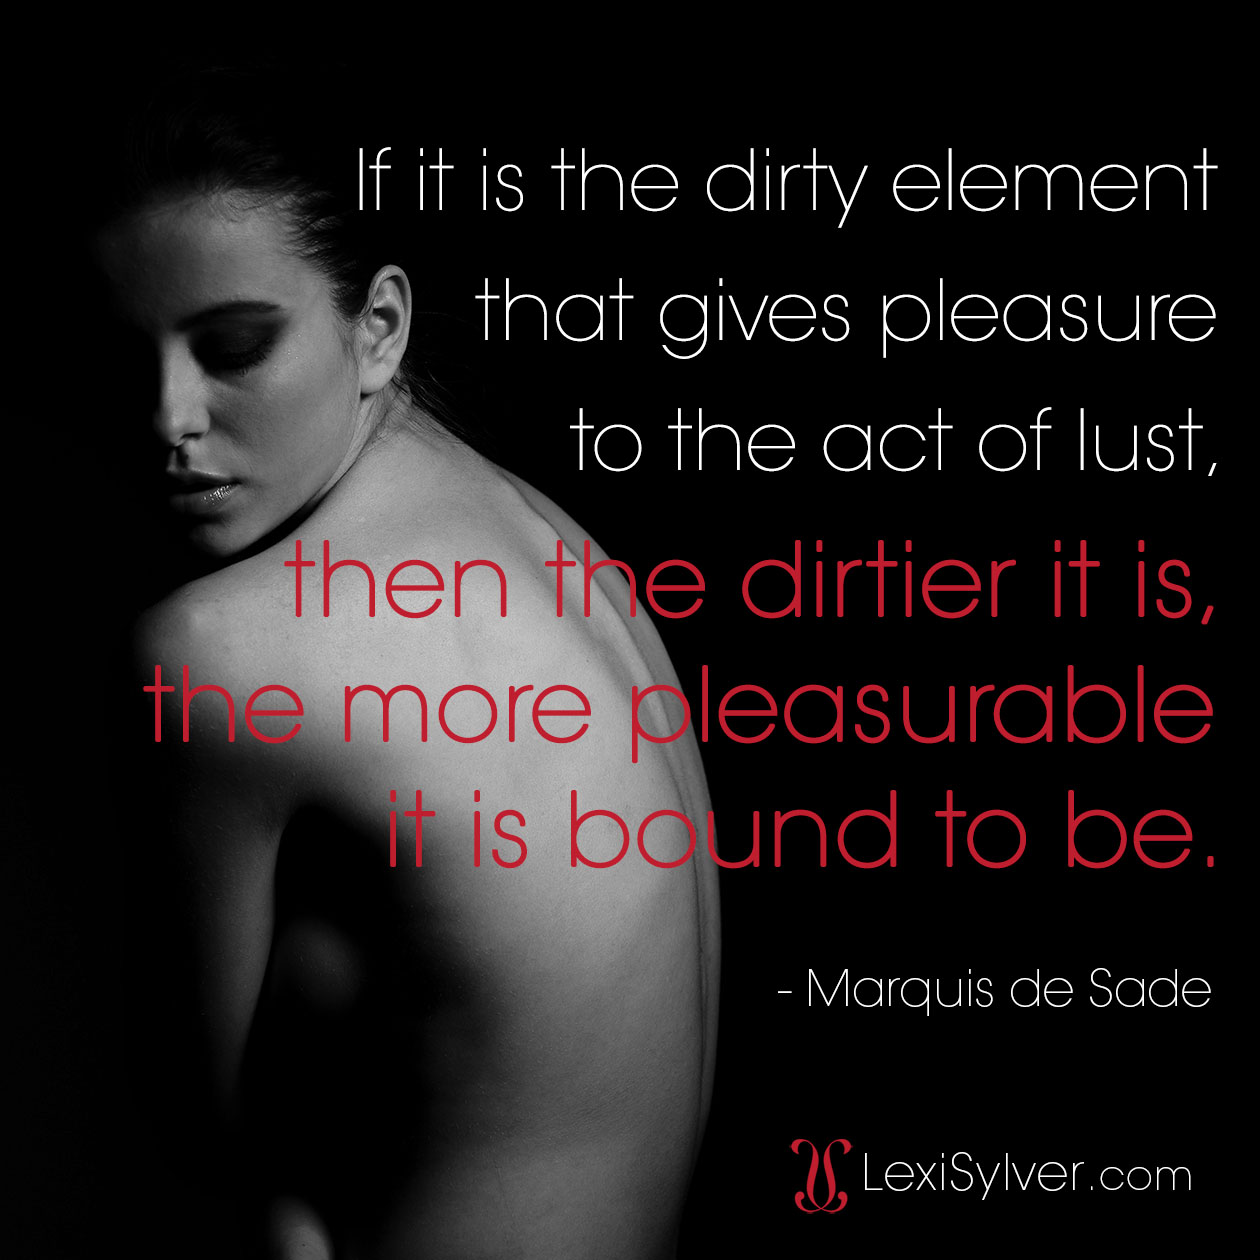 Marquis de Sade erotic quote | BDSM quotes | Lexi Sylver